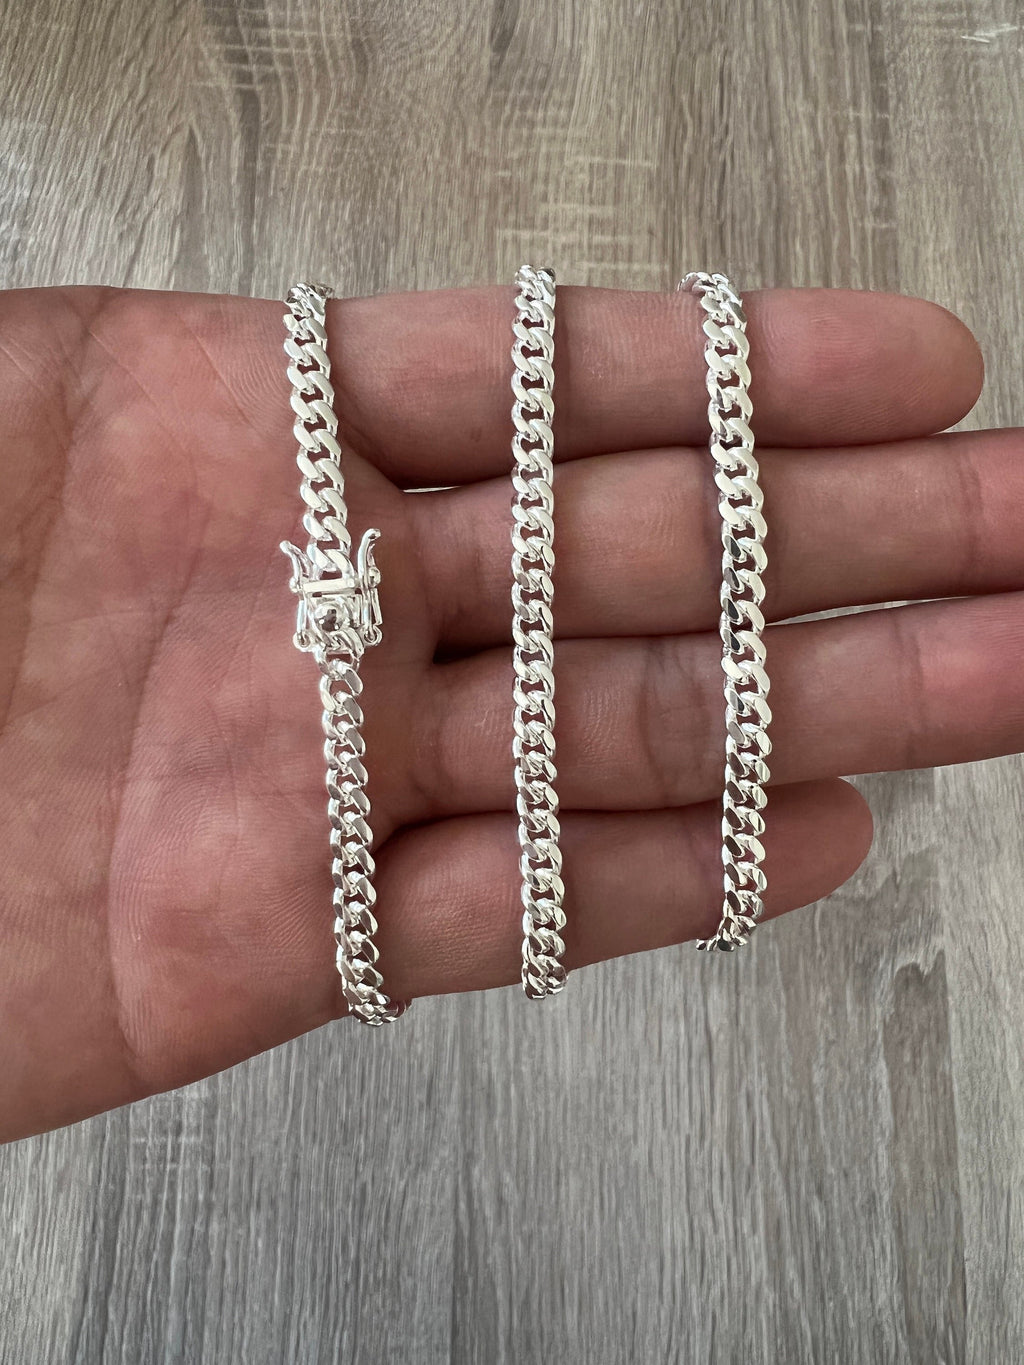 Miami Cuban Link Chain Necklace / Bracelet 14k Gold Finish Mens Ladies Box  Lock